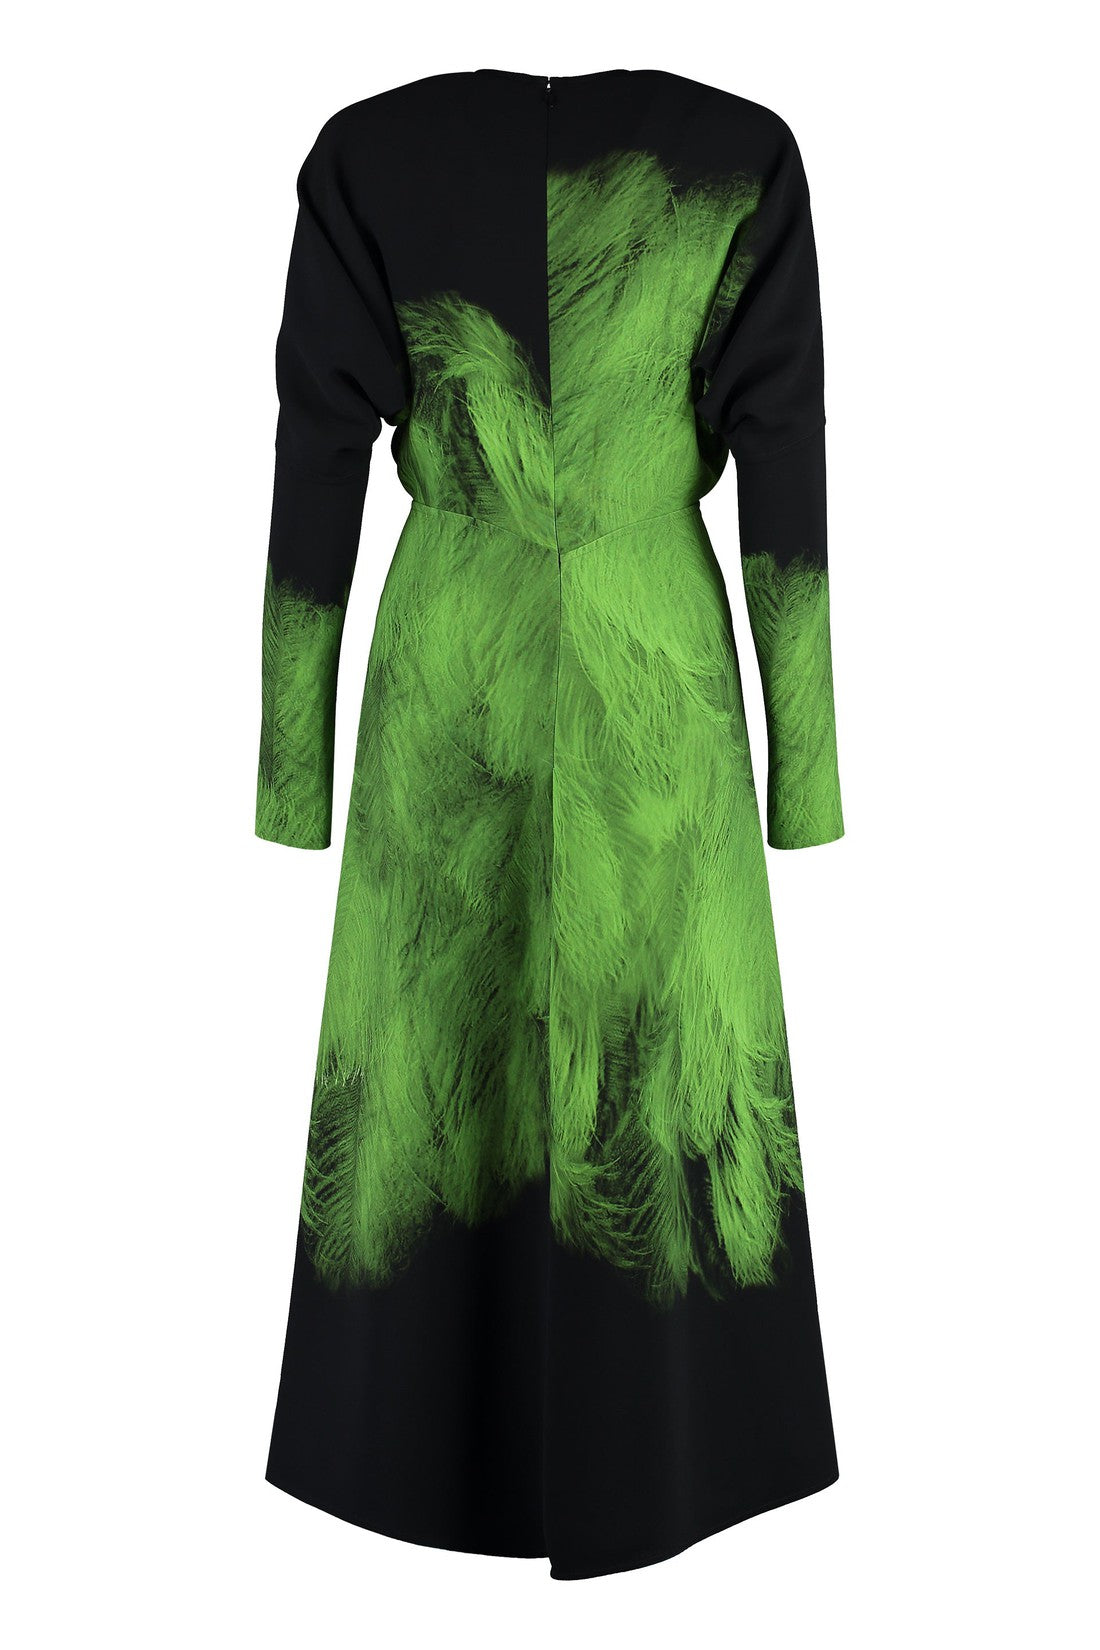 Victoria Beckham-OUTLET-SALE-Dolman printed dress-ARCHIVIST